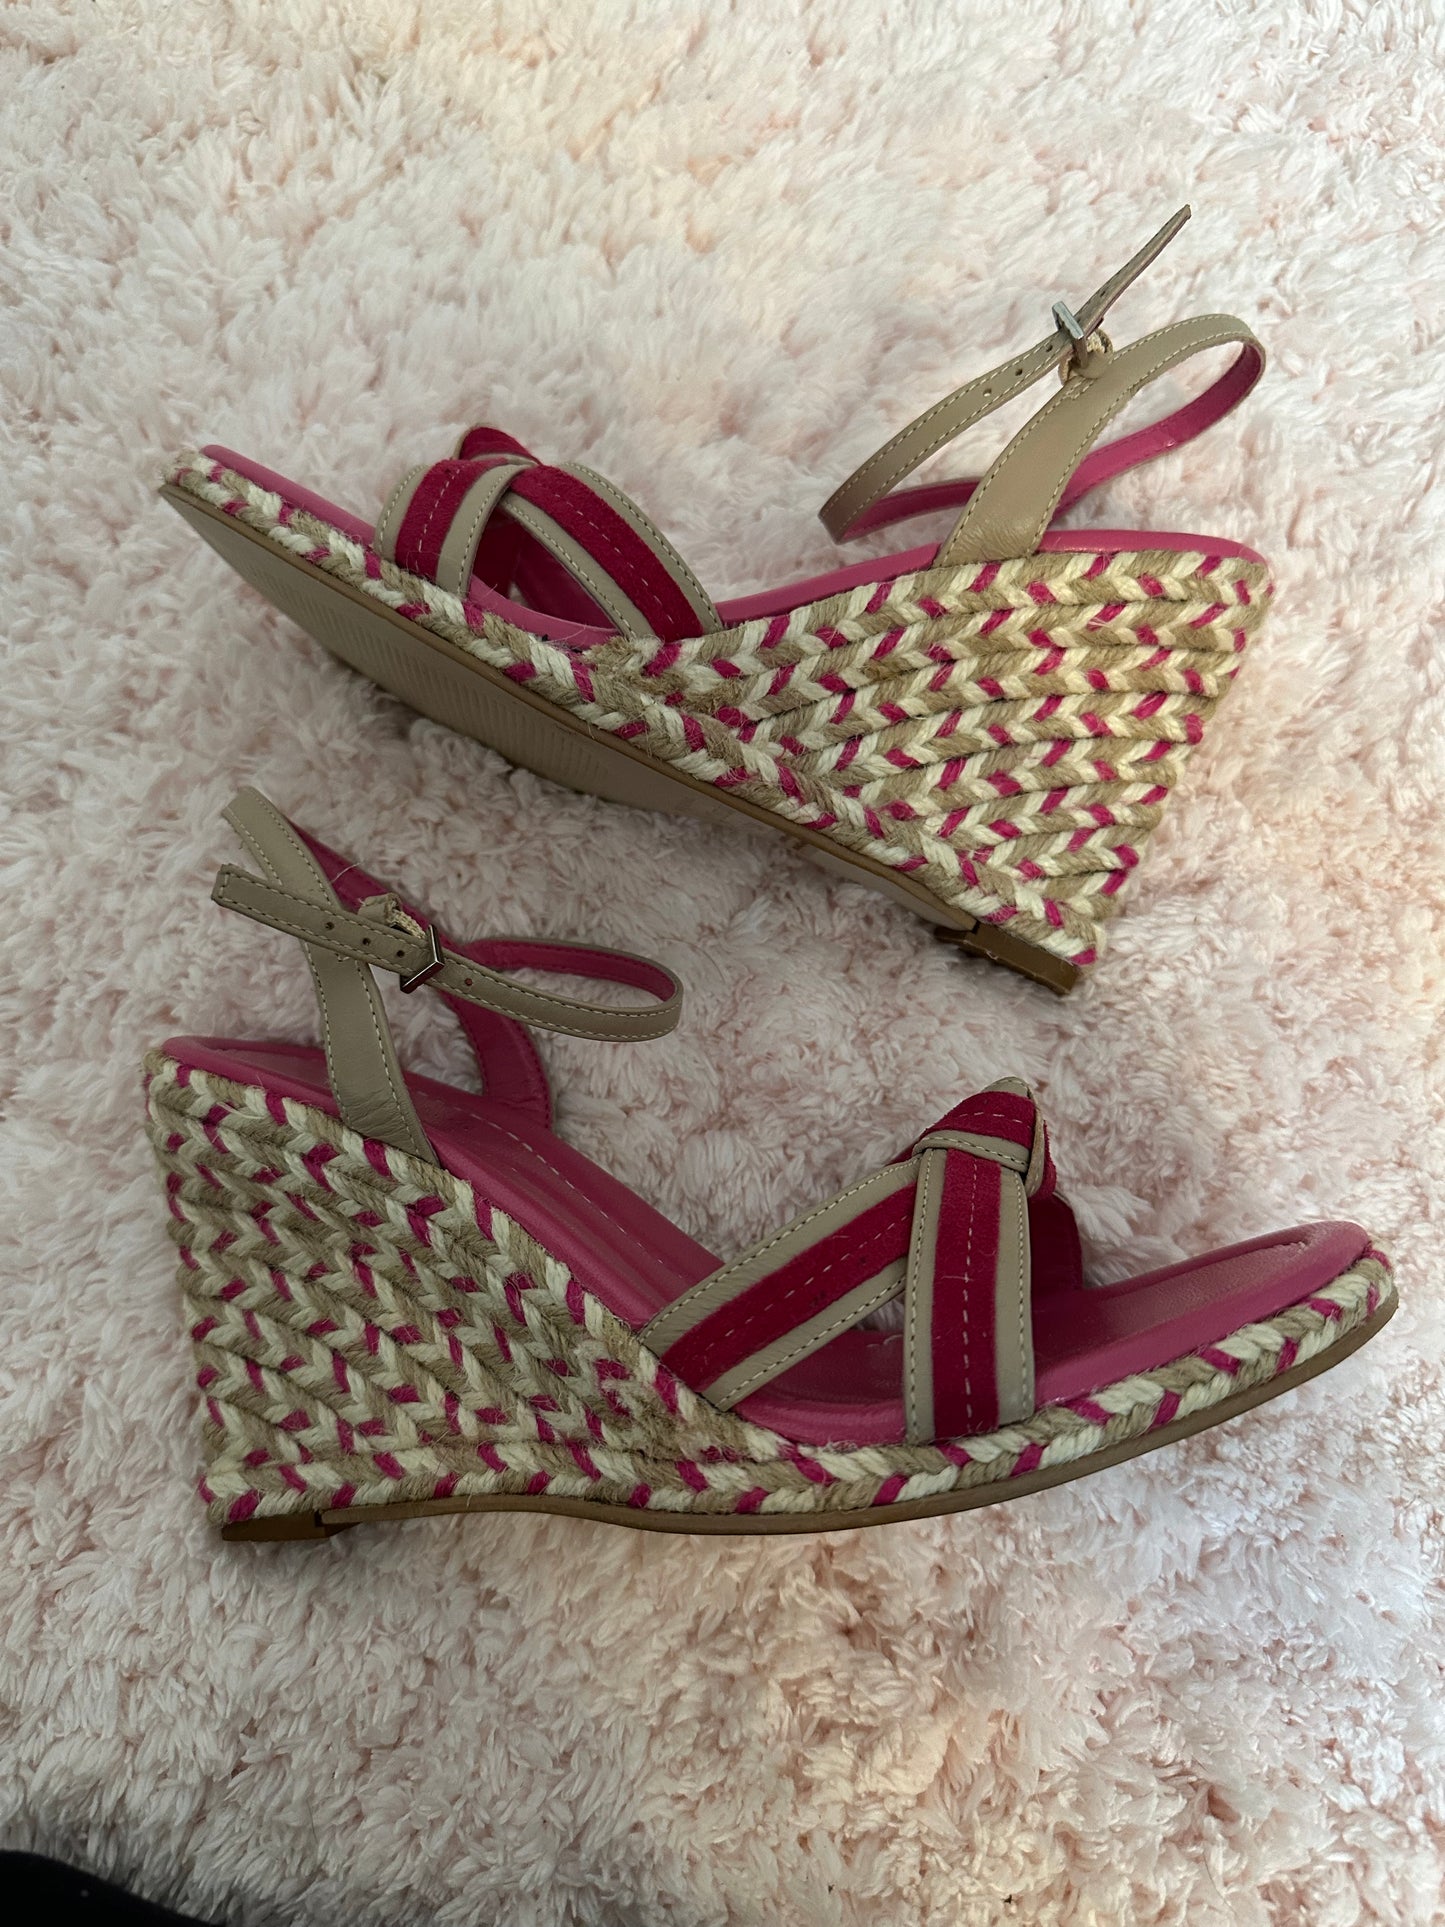 Ann Taylor Women’s Pink Wedges Shoes Heels Sz 6